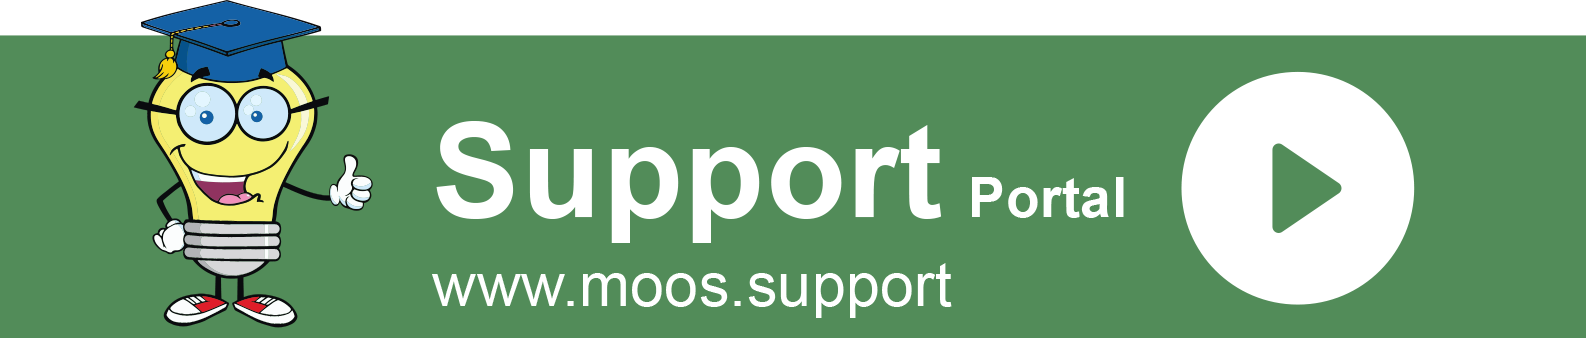 MOOS Support Portal